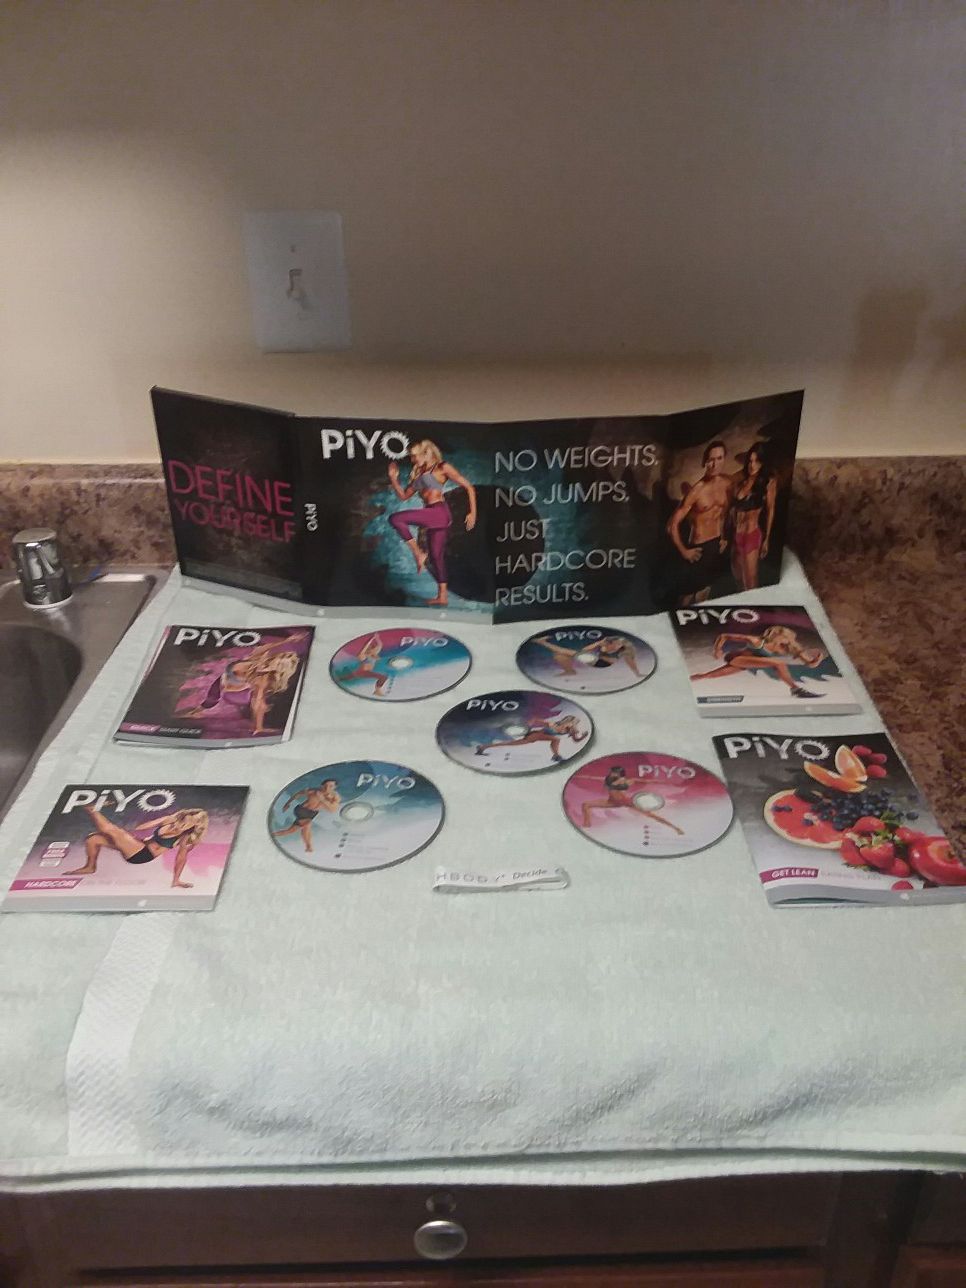 Piyo Complete Workout Dvd Set